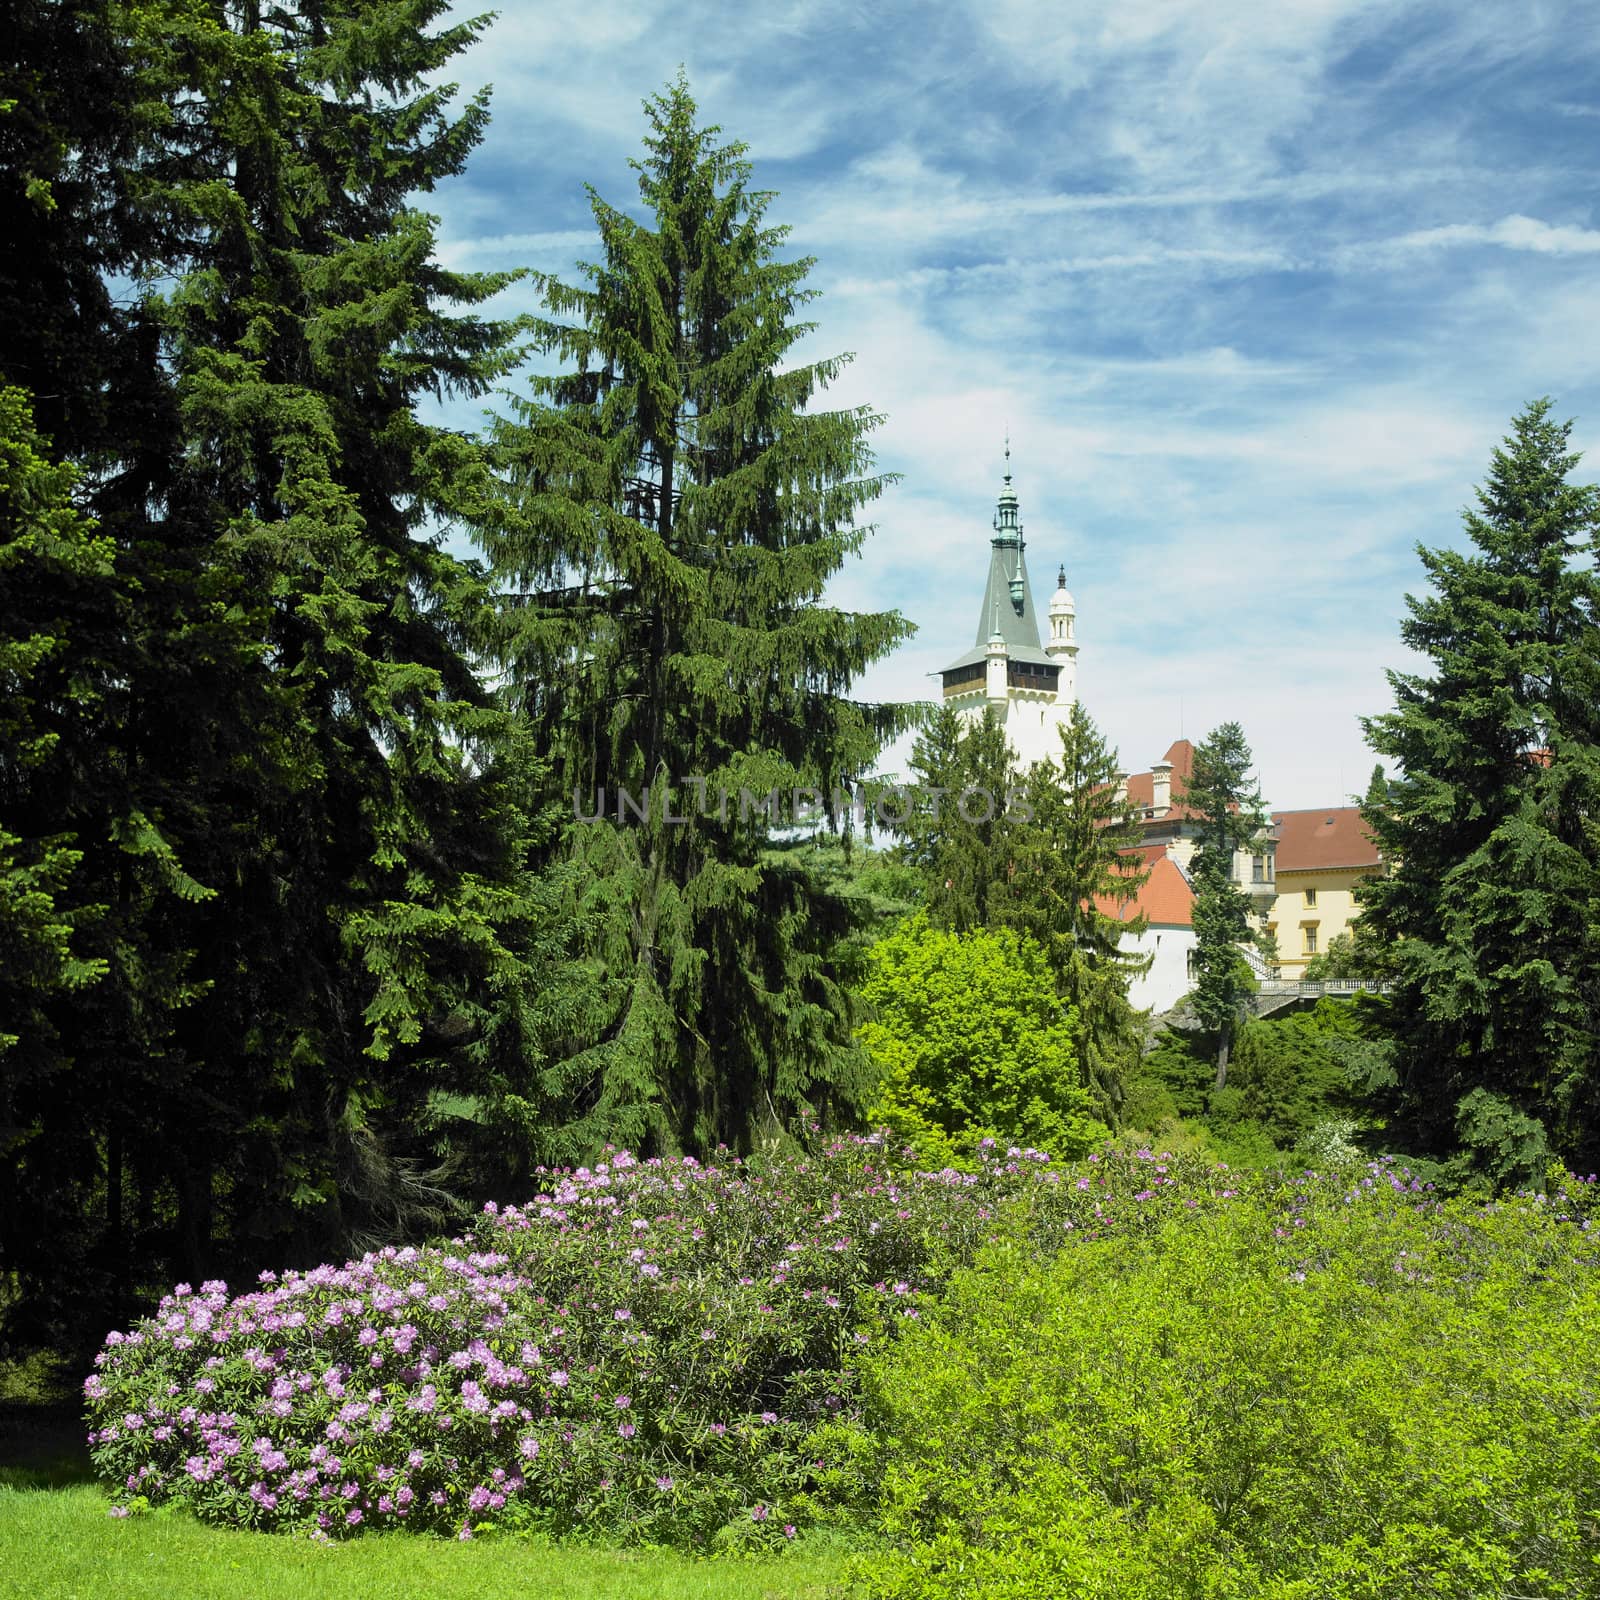 Pruhonice chateau, Czech Republic by phbcz